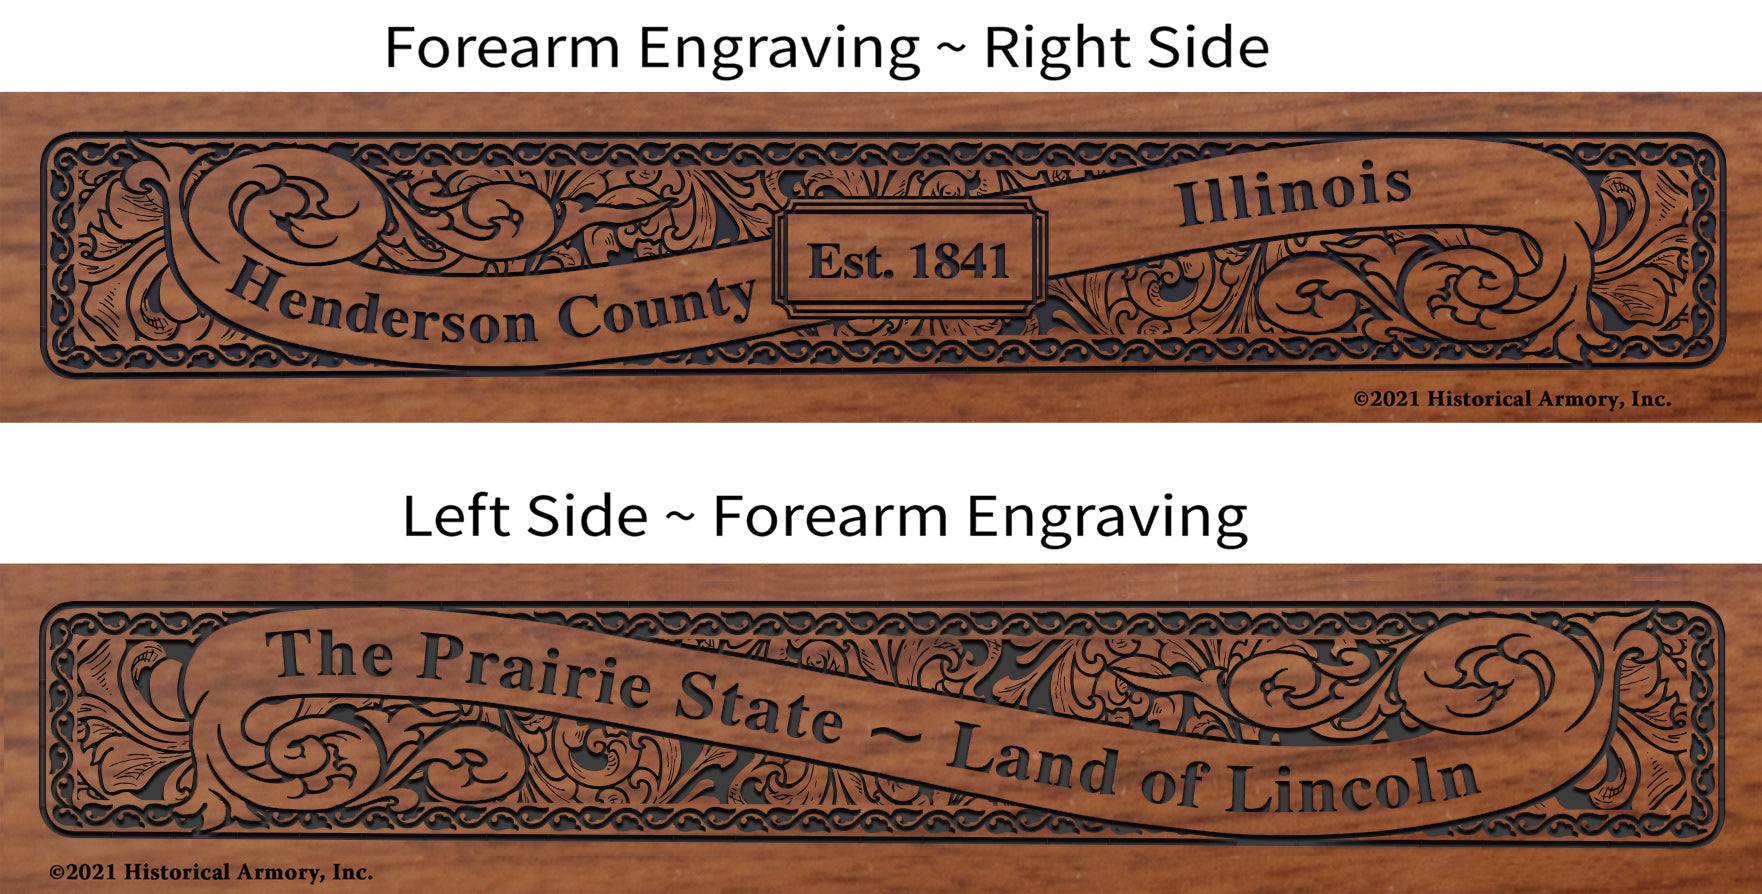 Henderson County Illinois Establishment and Motto History Engraved Rifle Forearm